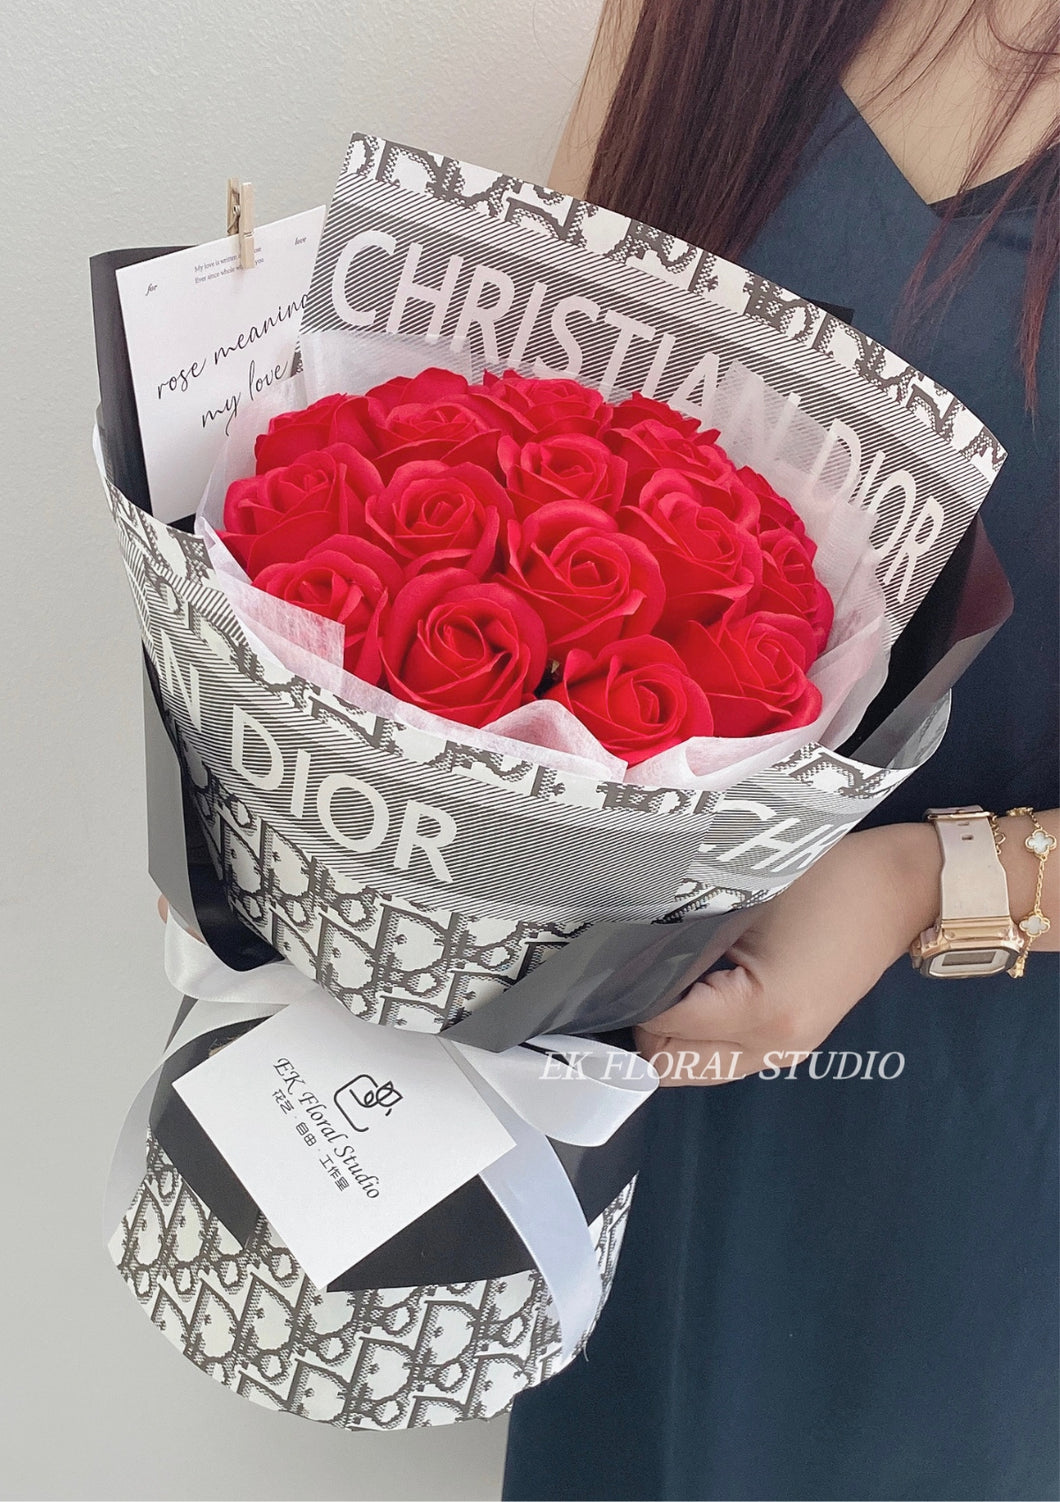 18 Red Soap Rose Bouquet 18朵红色香皂玫瑰圆形花束